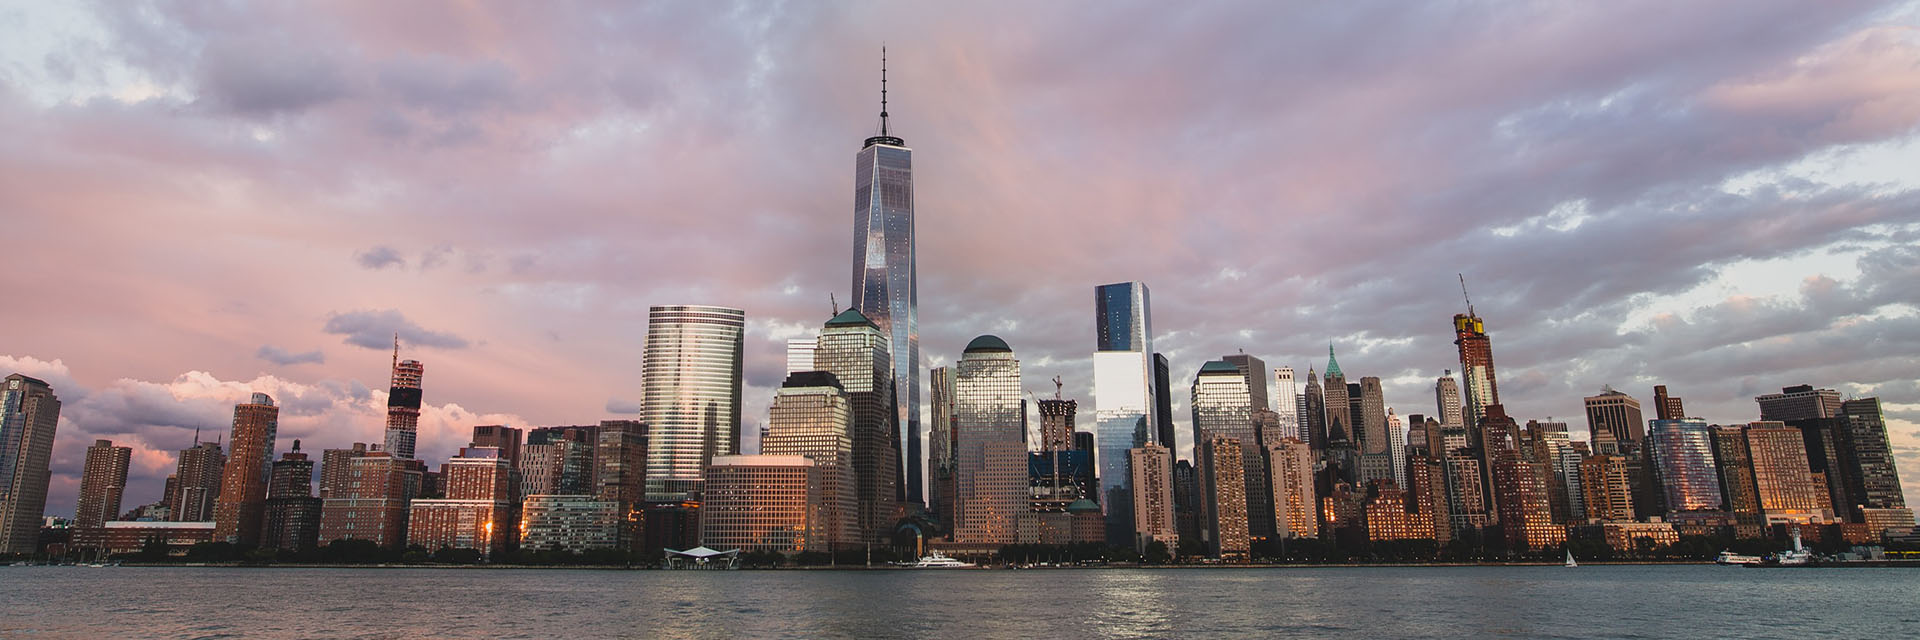 New York Skyline Photo by Nirzar Pangarkar on Unsplash